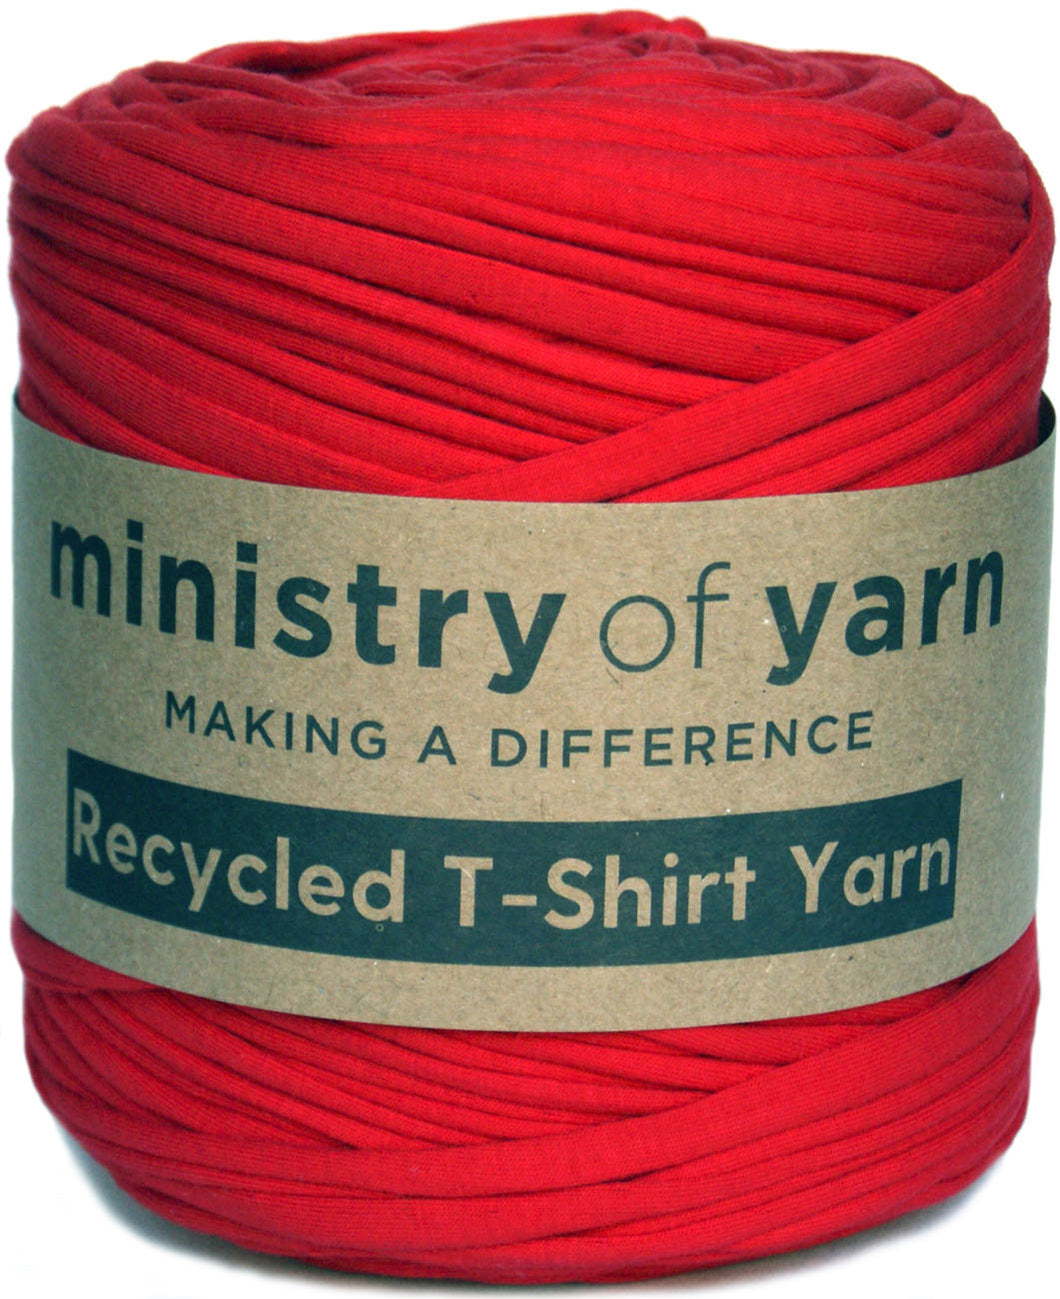 red recycled t-shirt yarn Australia